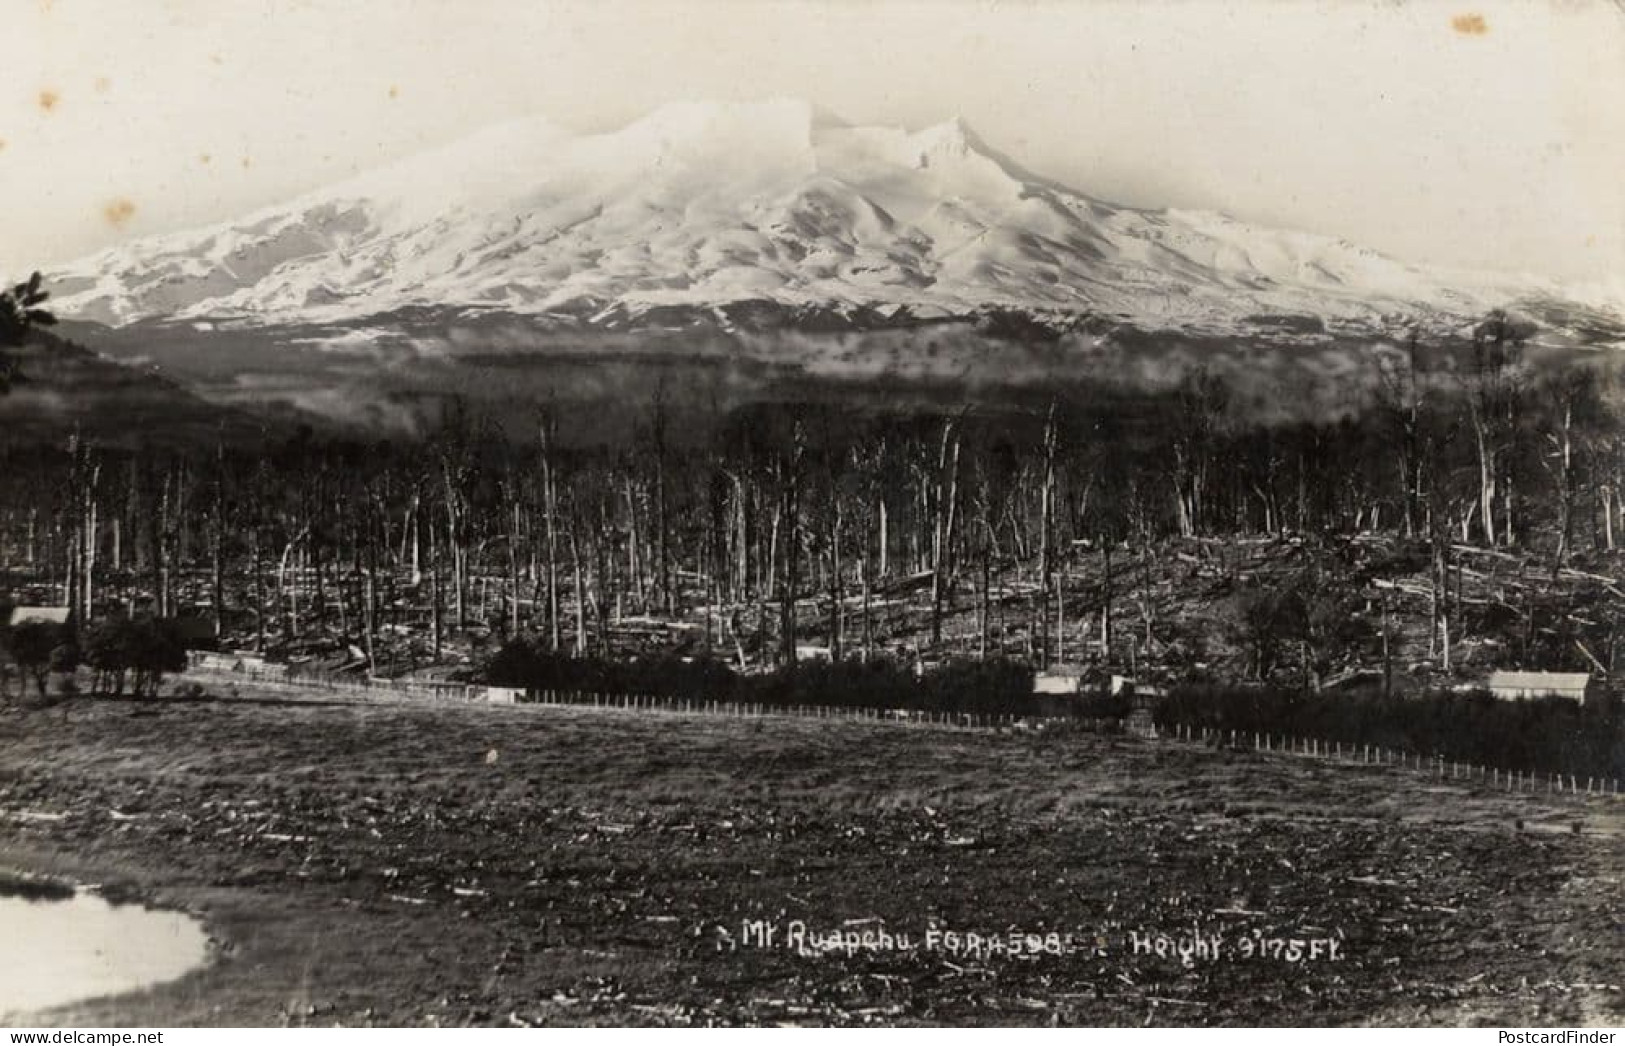 Mt. Ruapehu Volcano Mountain New Zealand RPC Old Postcard - New Zealand